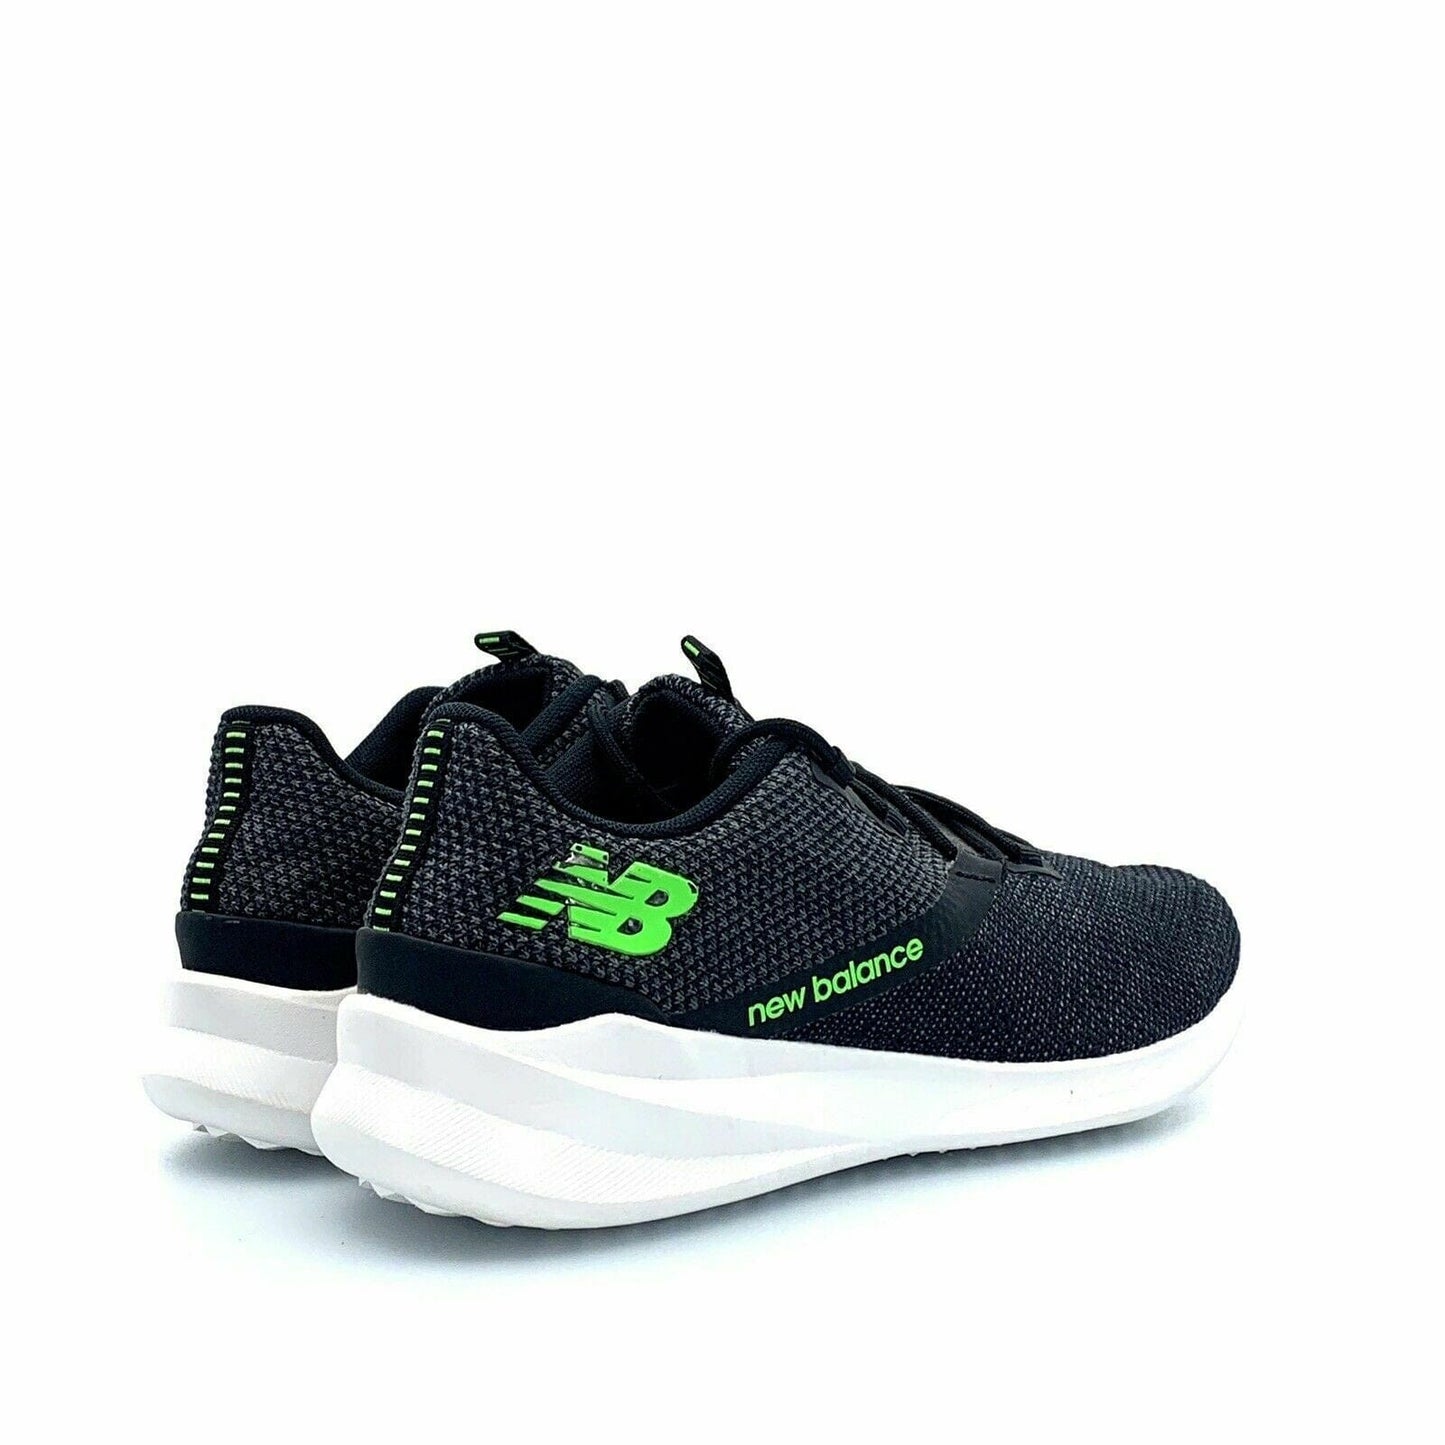 New Balance Mens Cush + District Run Running Shoes SIZE 8D Black Green MDRNSB1 - parsimonyshoppes